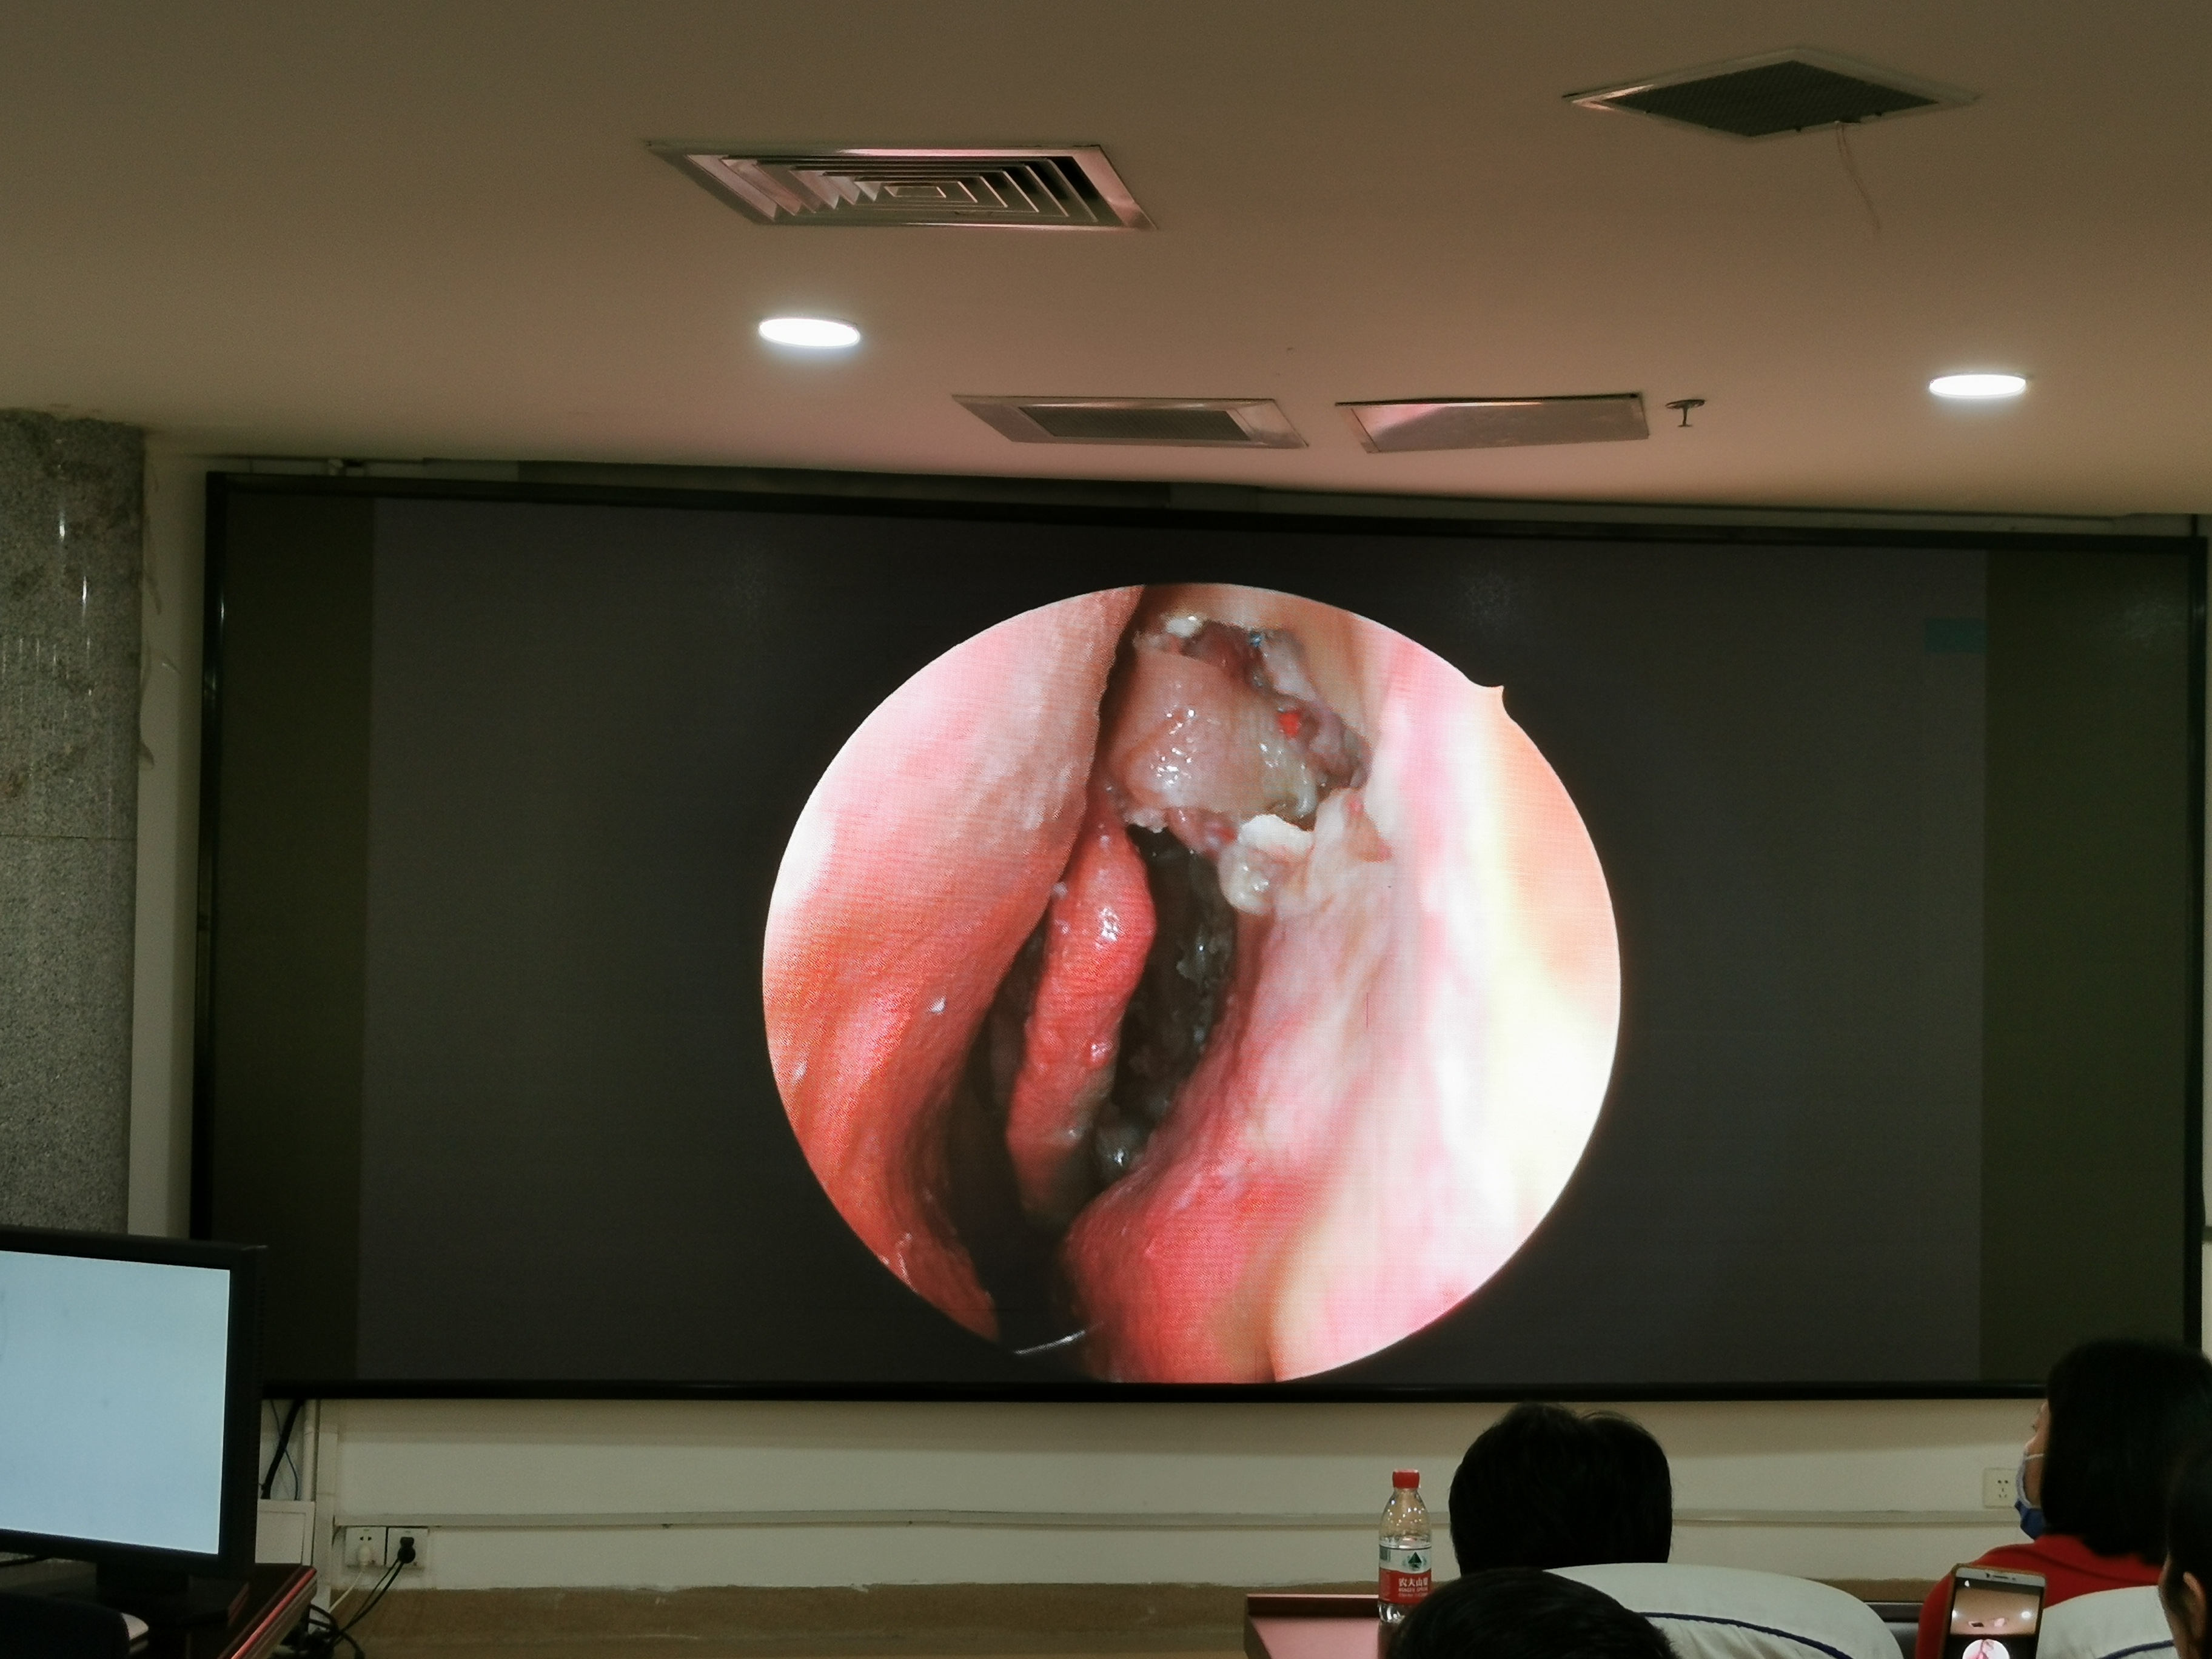 Dajing Endoscope Camera System Used in Hospital